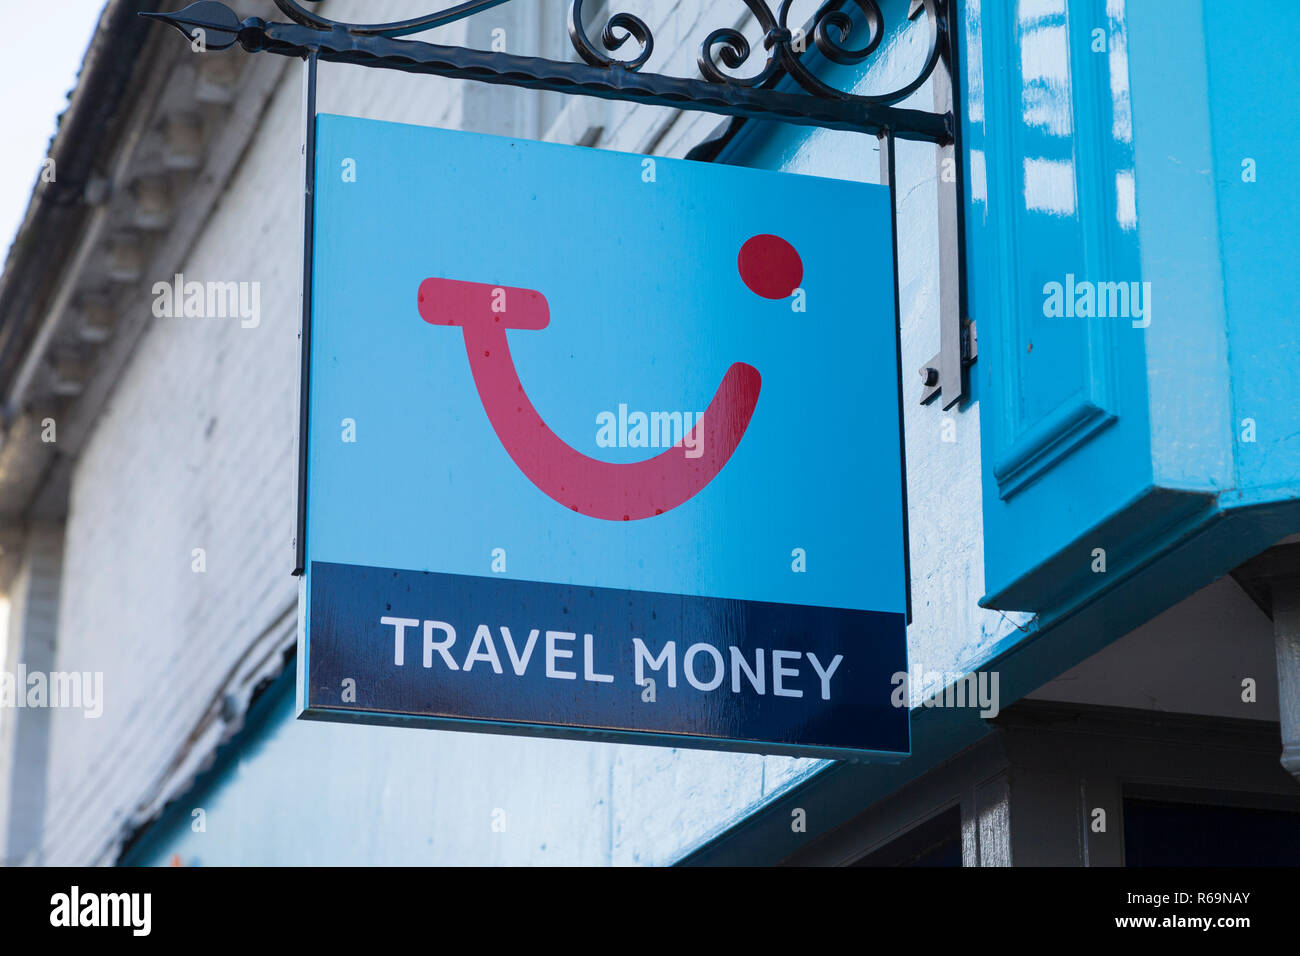 Tui, travel money logo sign, ashford, uk Stock Photo